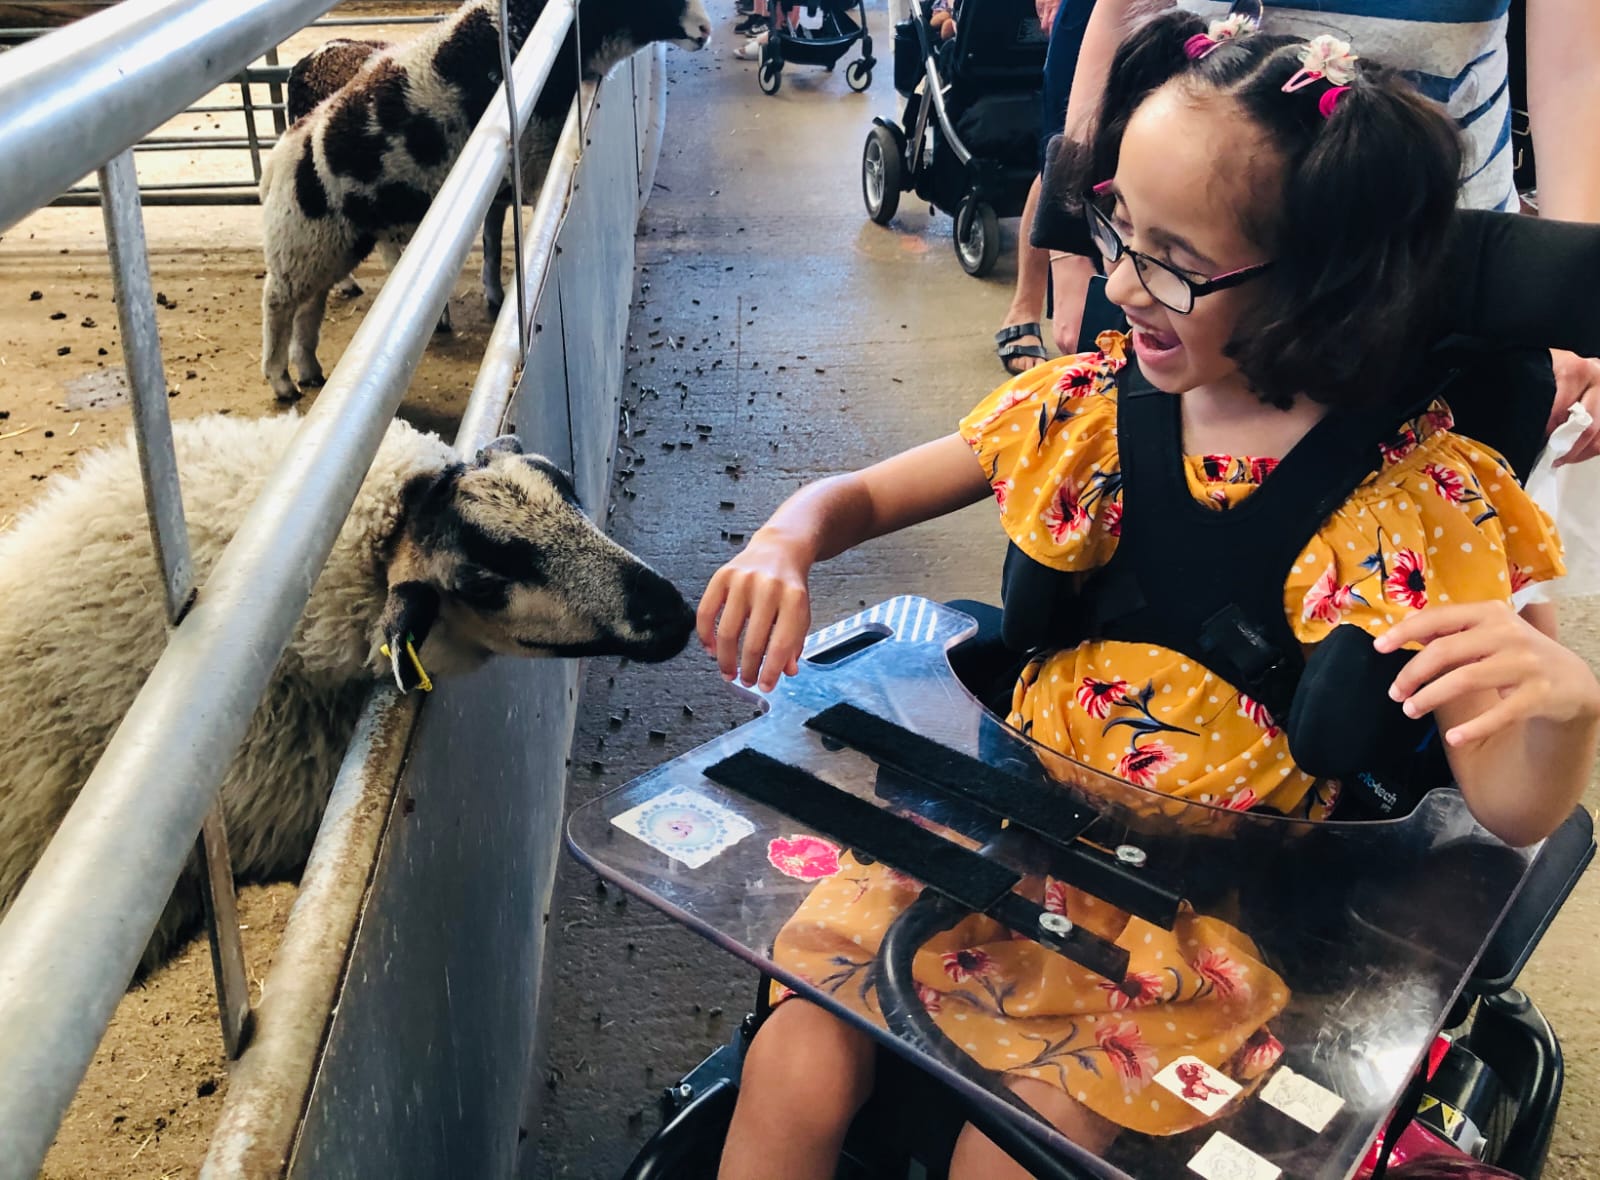 Girl with Cerebral Palsy feeding sheep